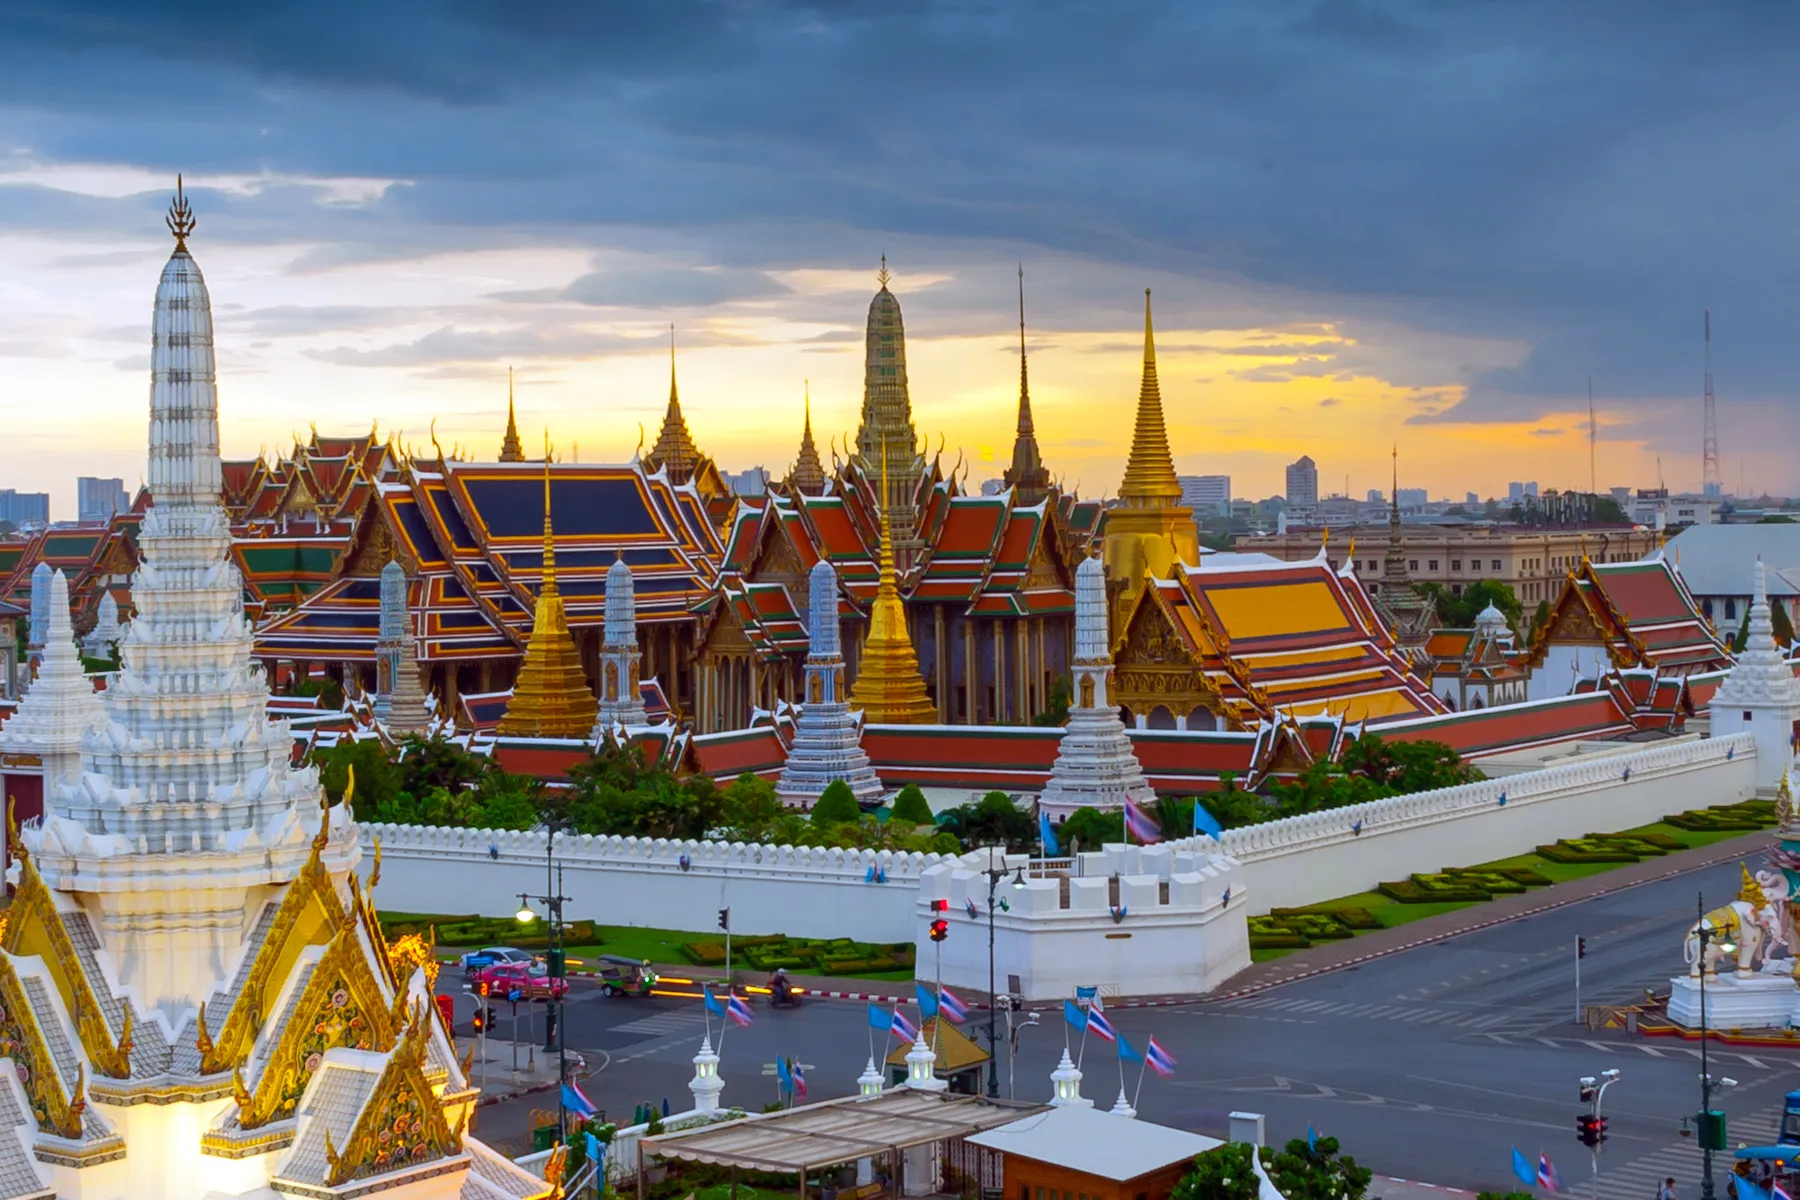 Wat Phra Kaew (Temple of the Emerald Buddha) – Smarthistory